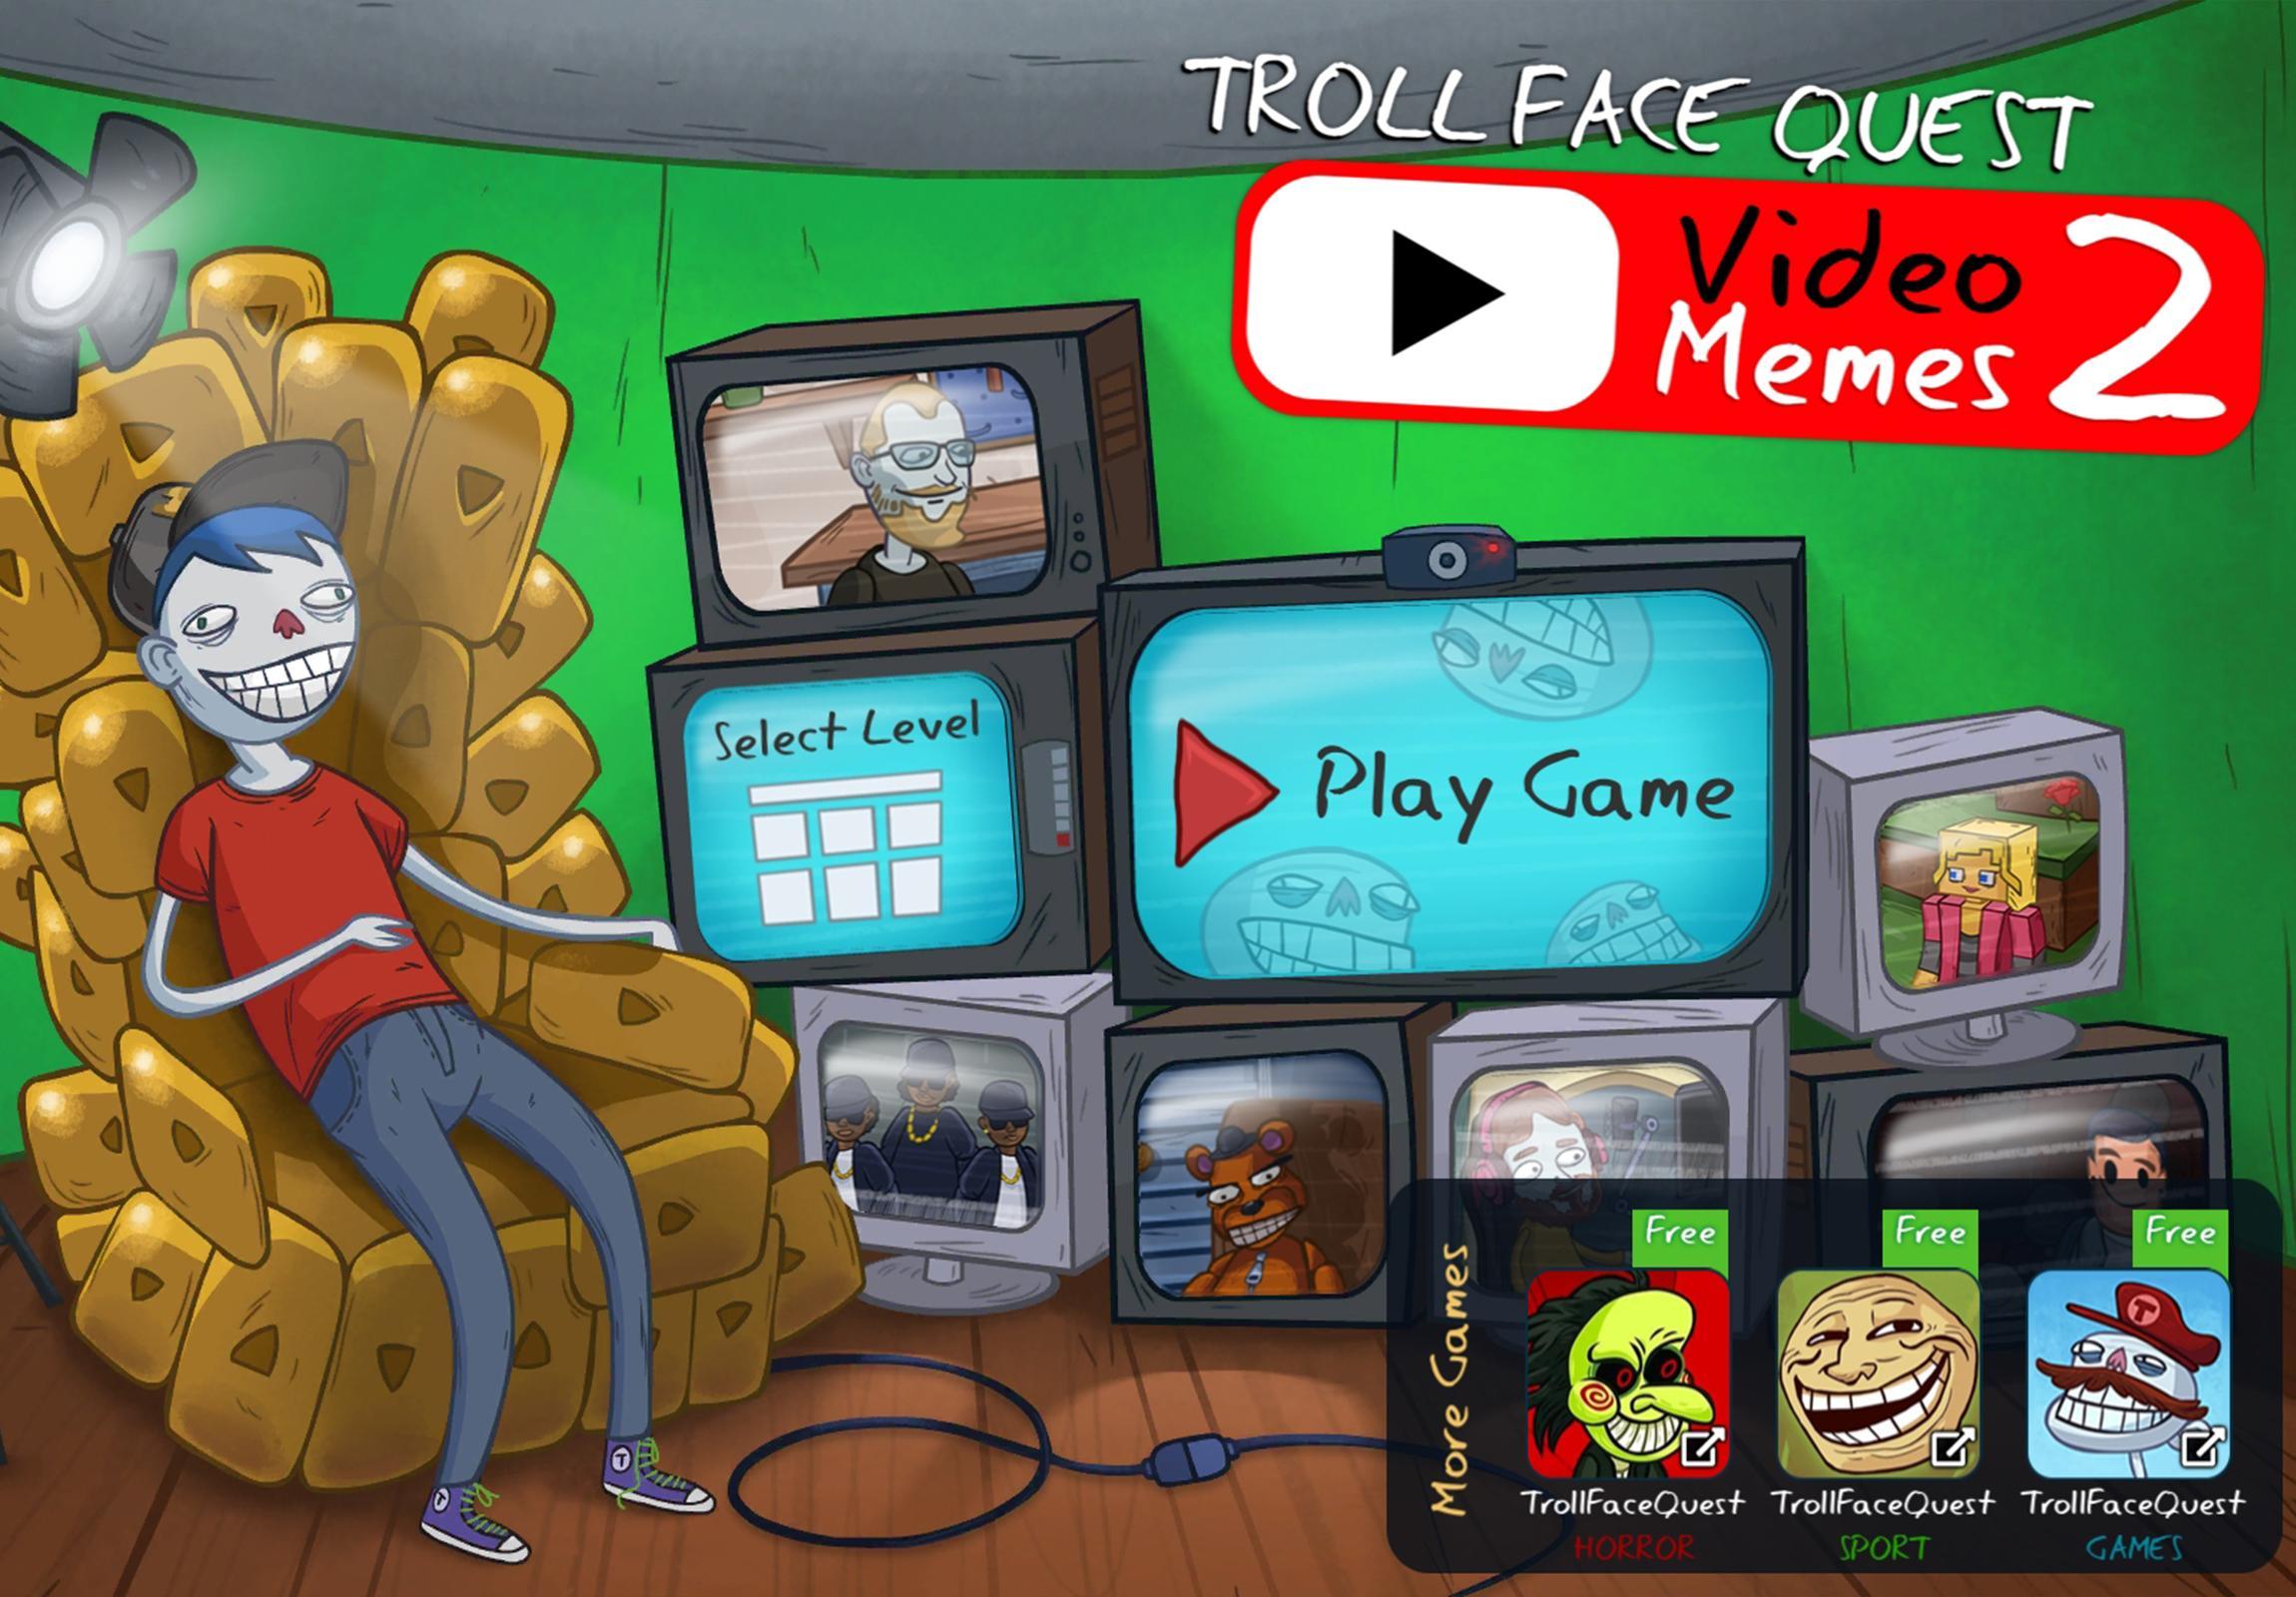 Тролль квест. Троллфейс игра. Troll Quest Video games. Тролль фейс квест. Trollface quest memes